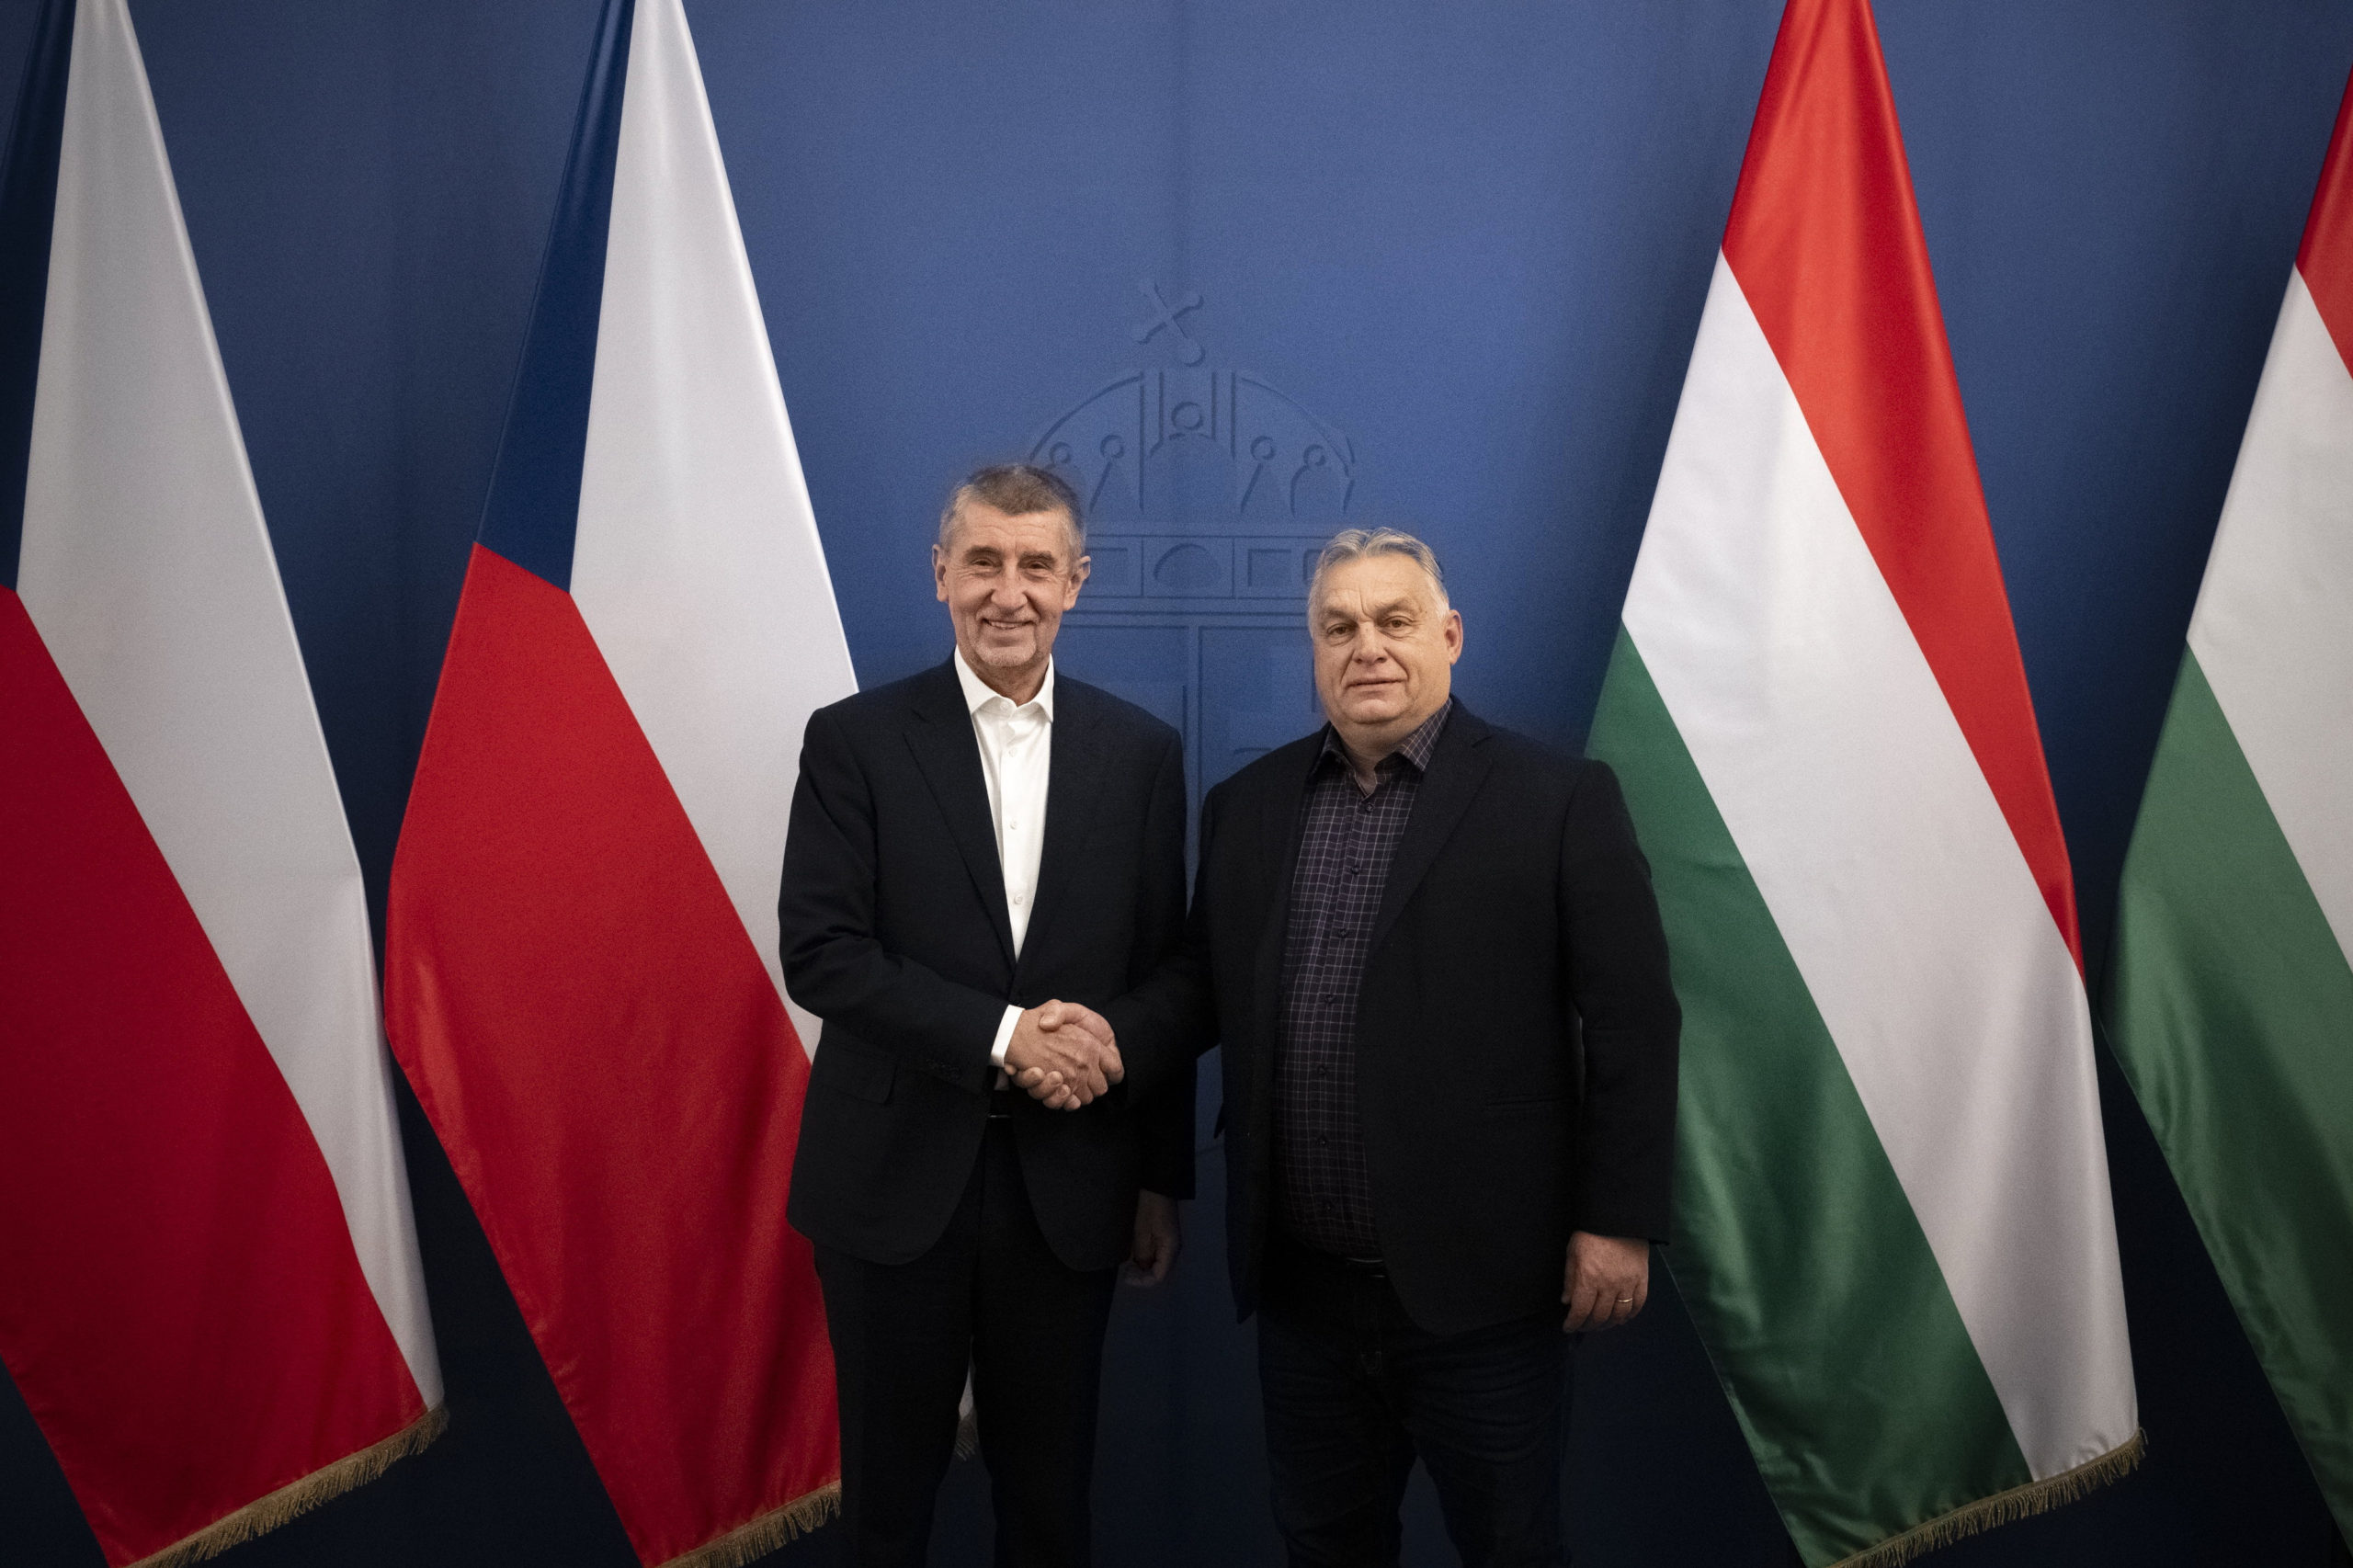 Andrej Babissal tárgyalt Orbán Viktor